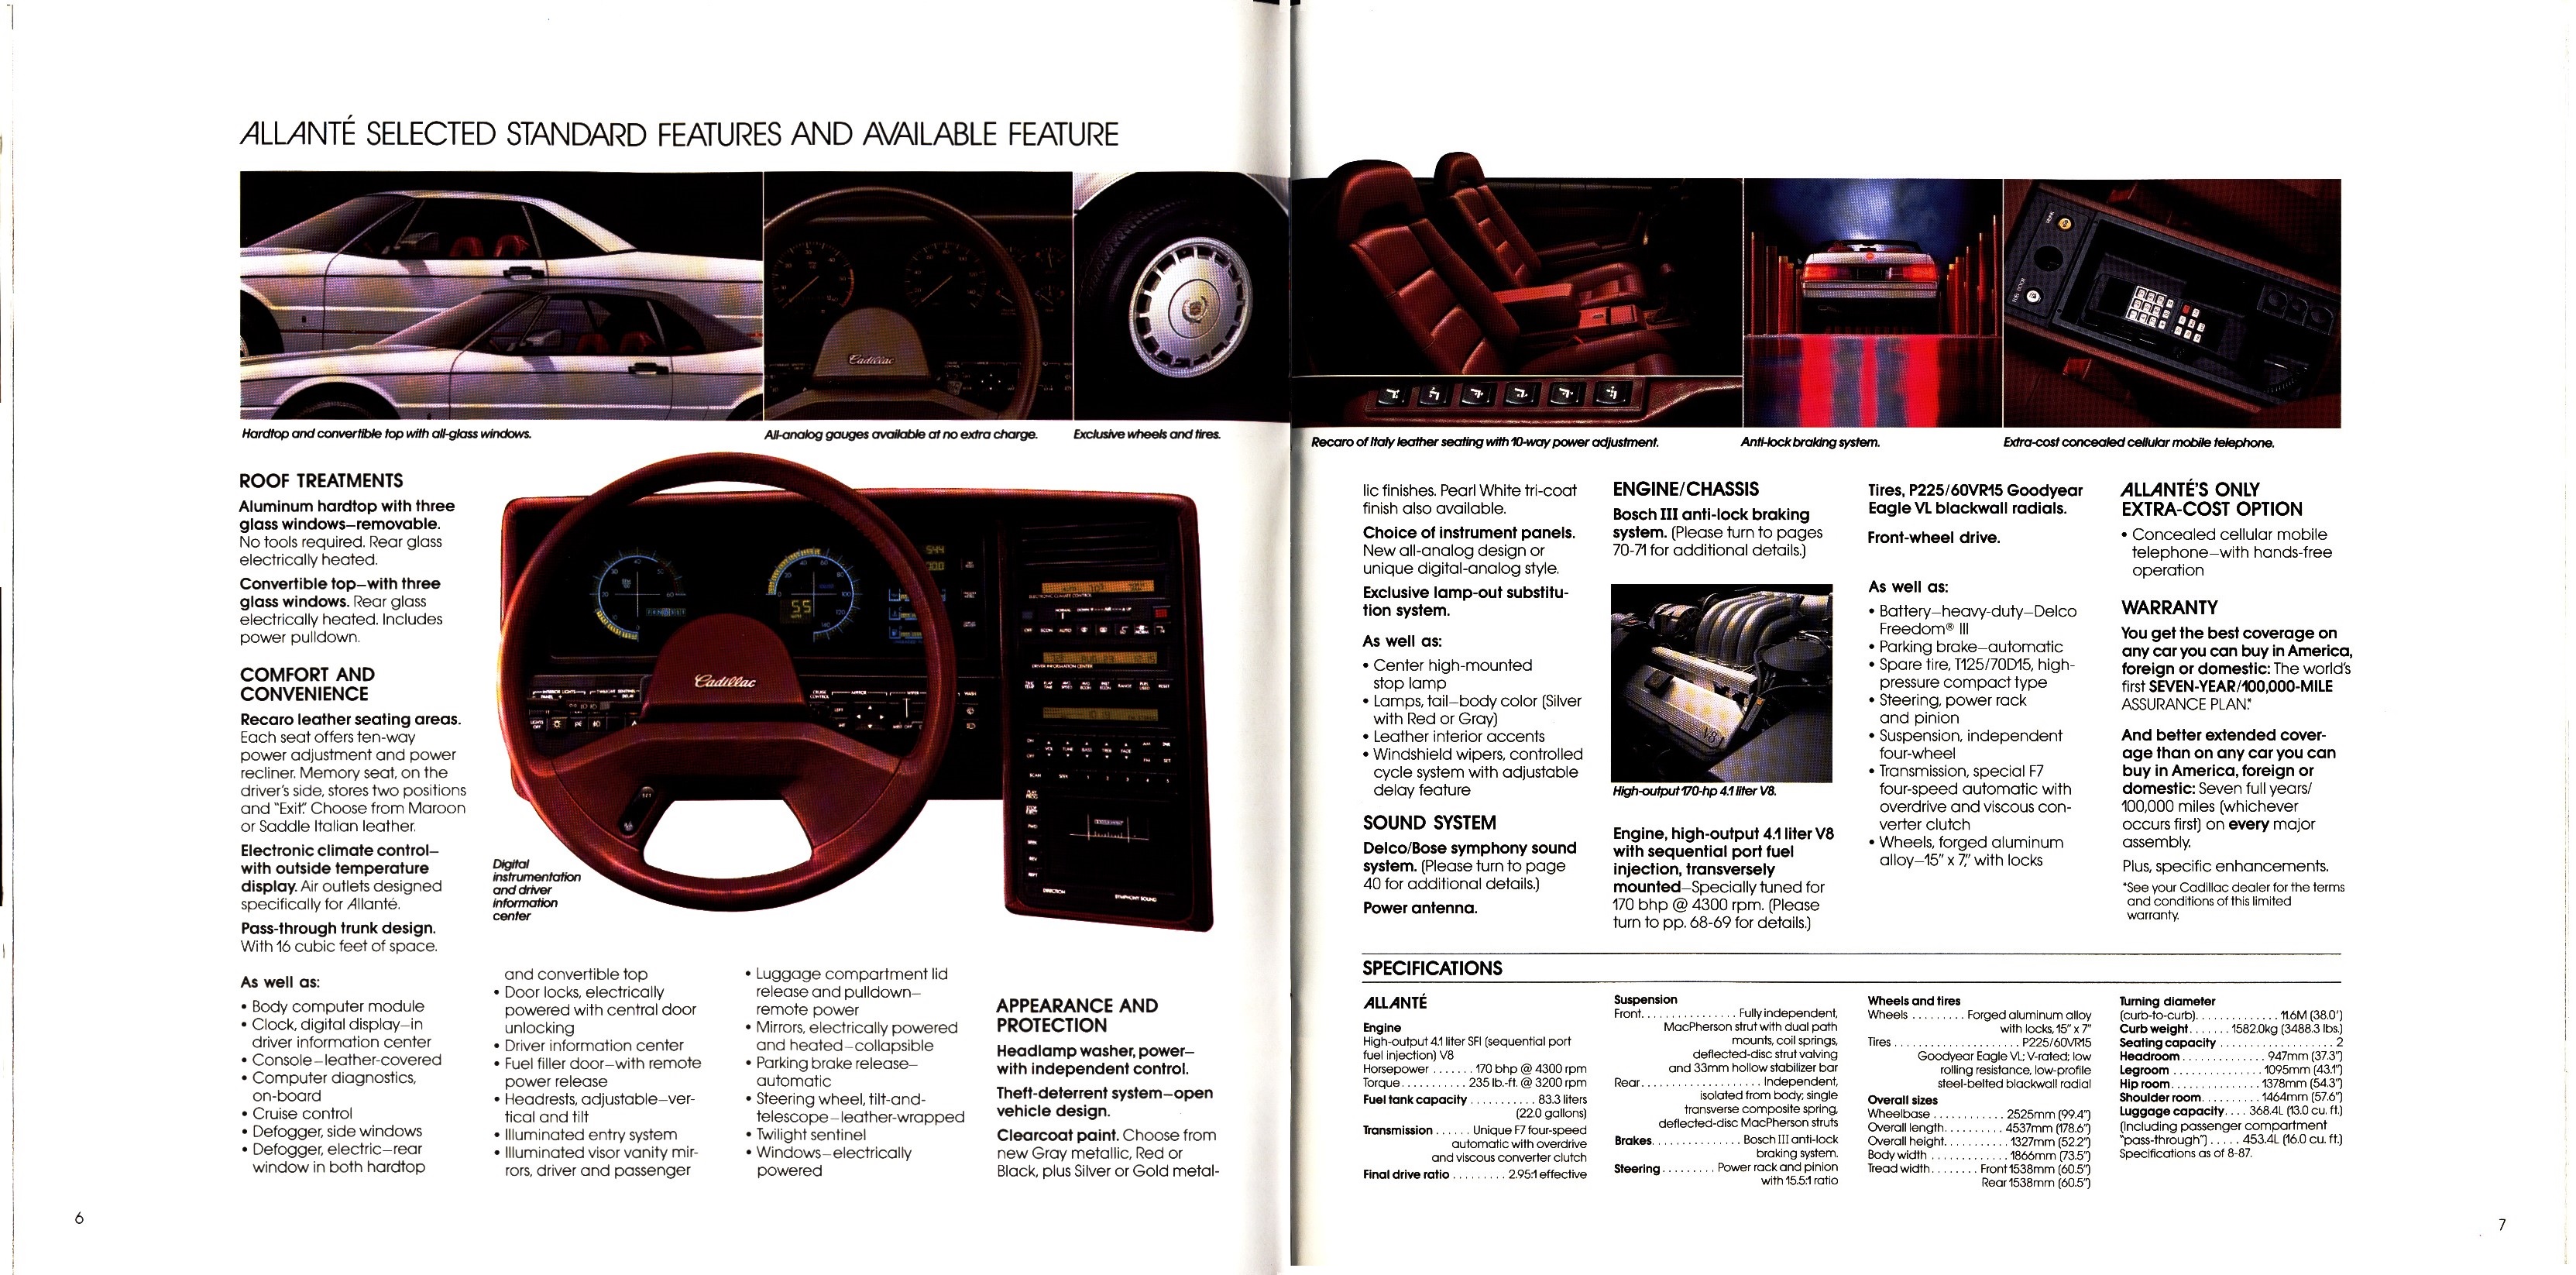 1988 Cadillac Full Line Prestige Brochure 06-07